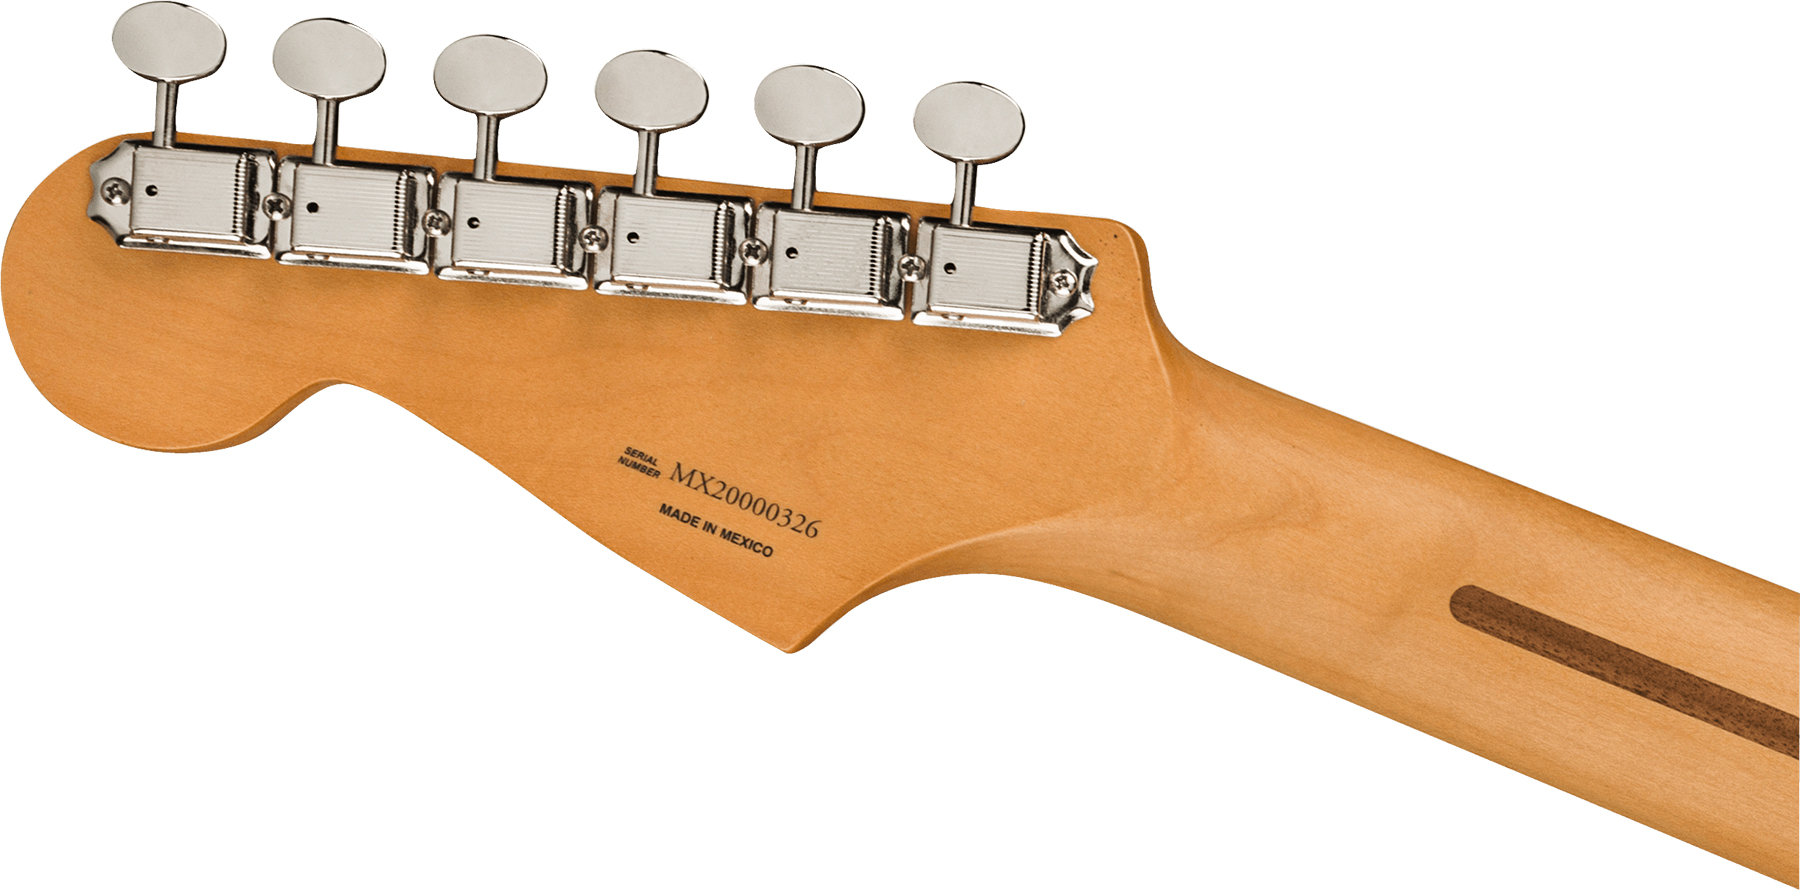 Fender H.e.r. Strat Signature Mex 3s Trem Mn - Chrome Glow - Str shape electric guitar - Variation 3